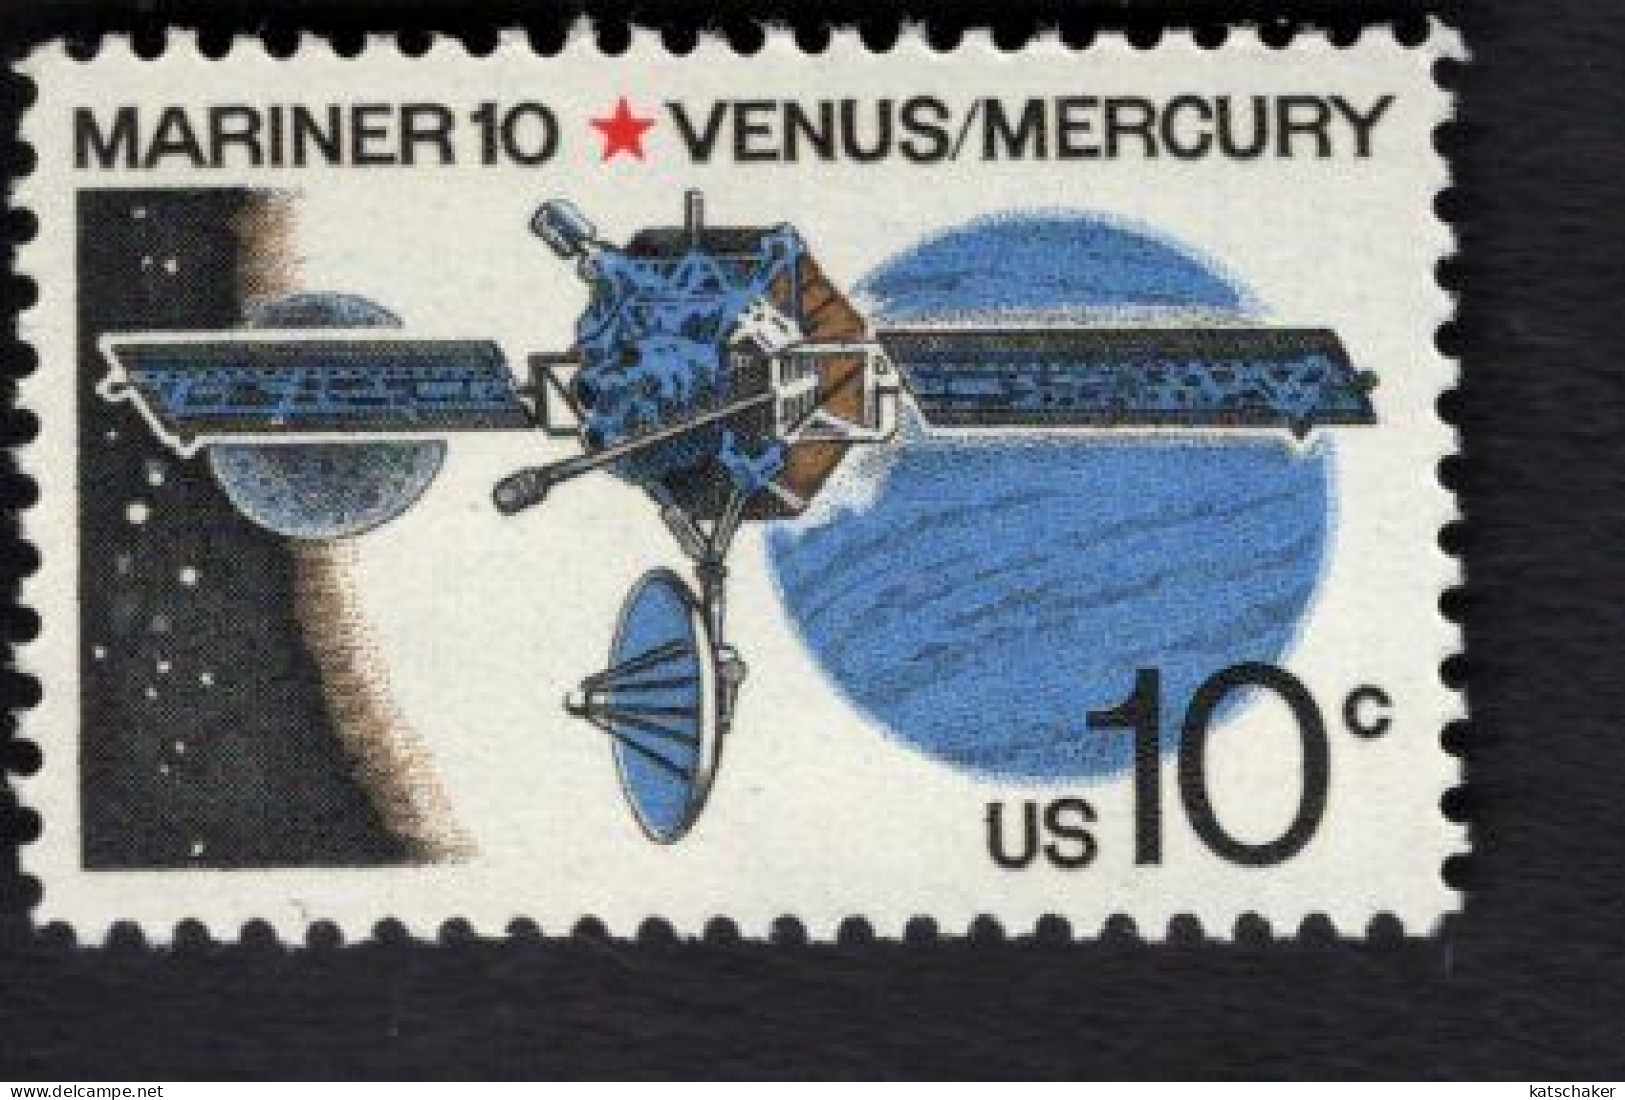 199981255 1975 SCOTT 1557 (XX) POSTFRIS MINT NEVER HINGED - SPACE - MARINER 10 VENUS MERCURY - Neufs